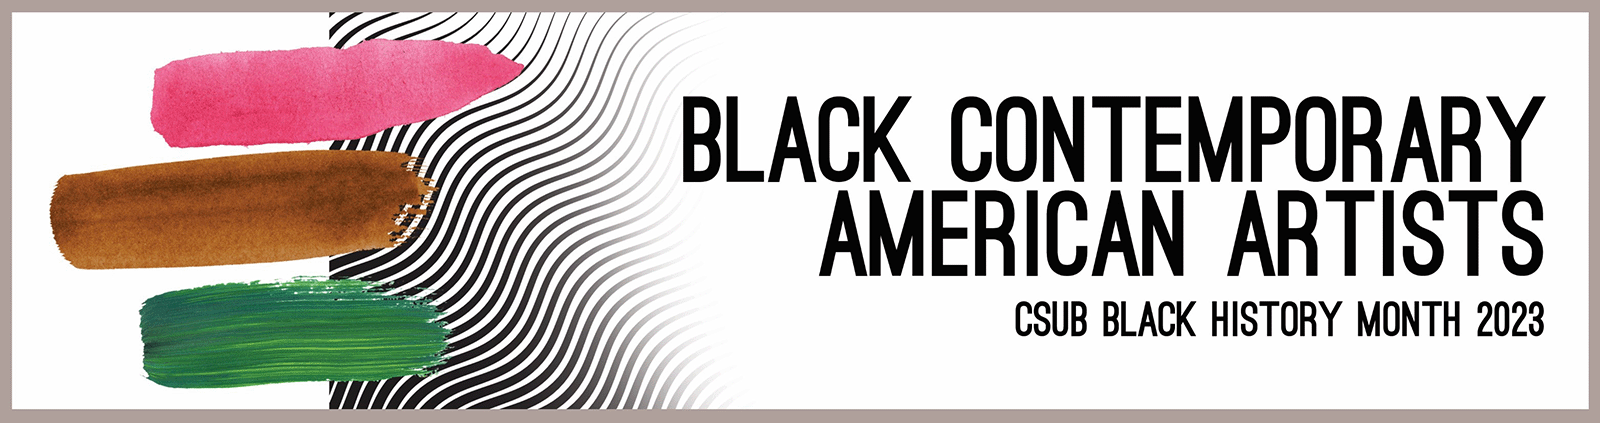 Black Contemporary American Artists Flyer